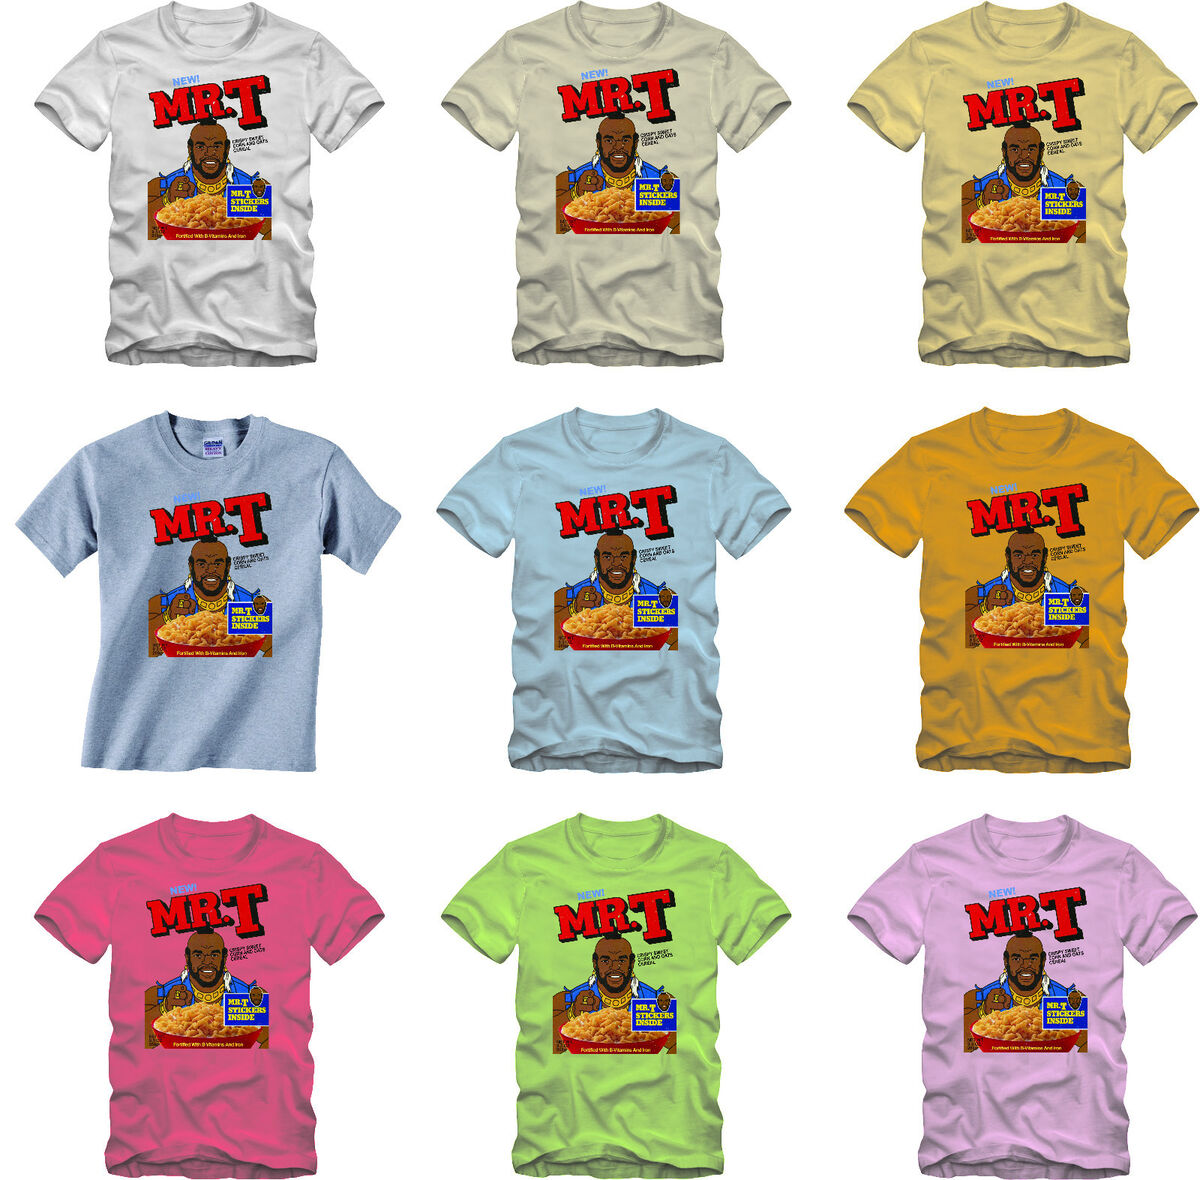 T Box T-Shirt 80s TV show A-Team BA baracus pity fool | eBay